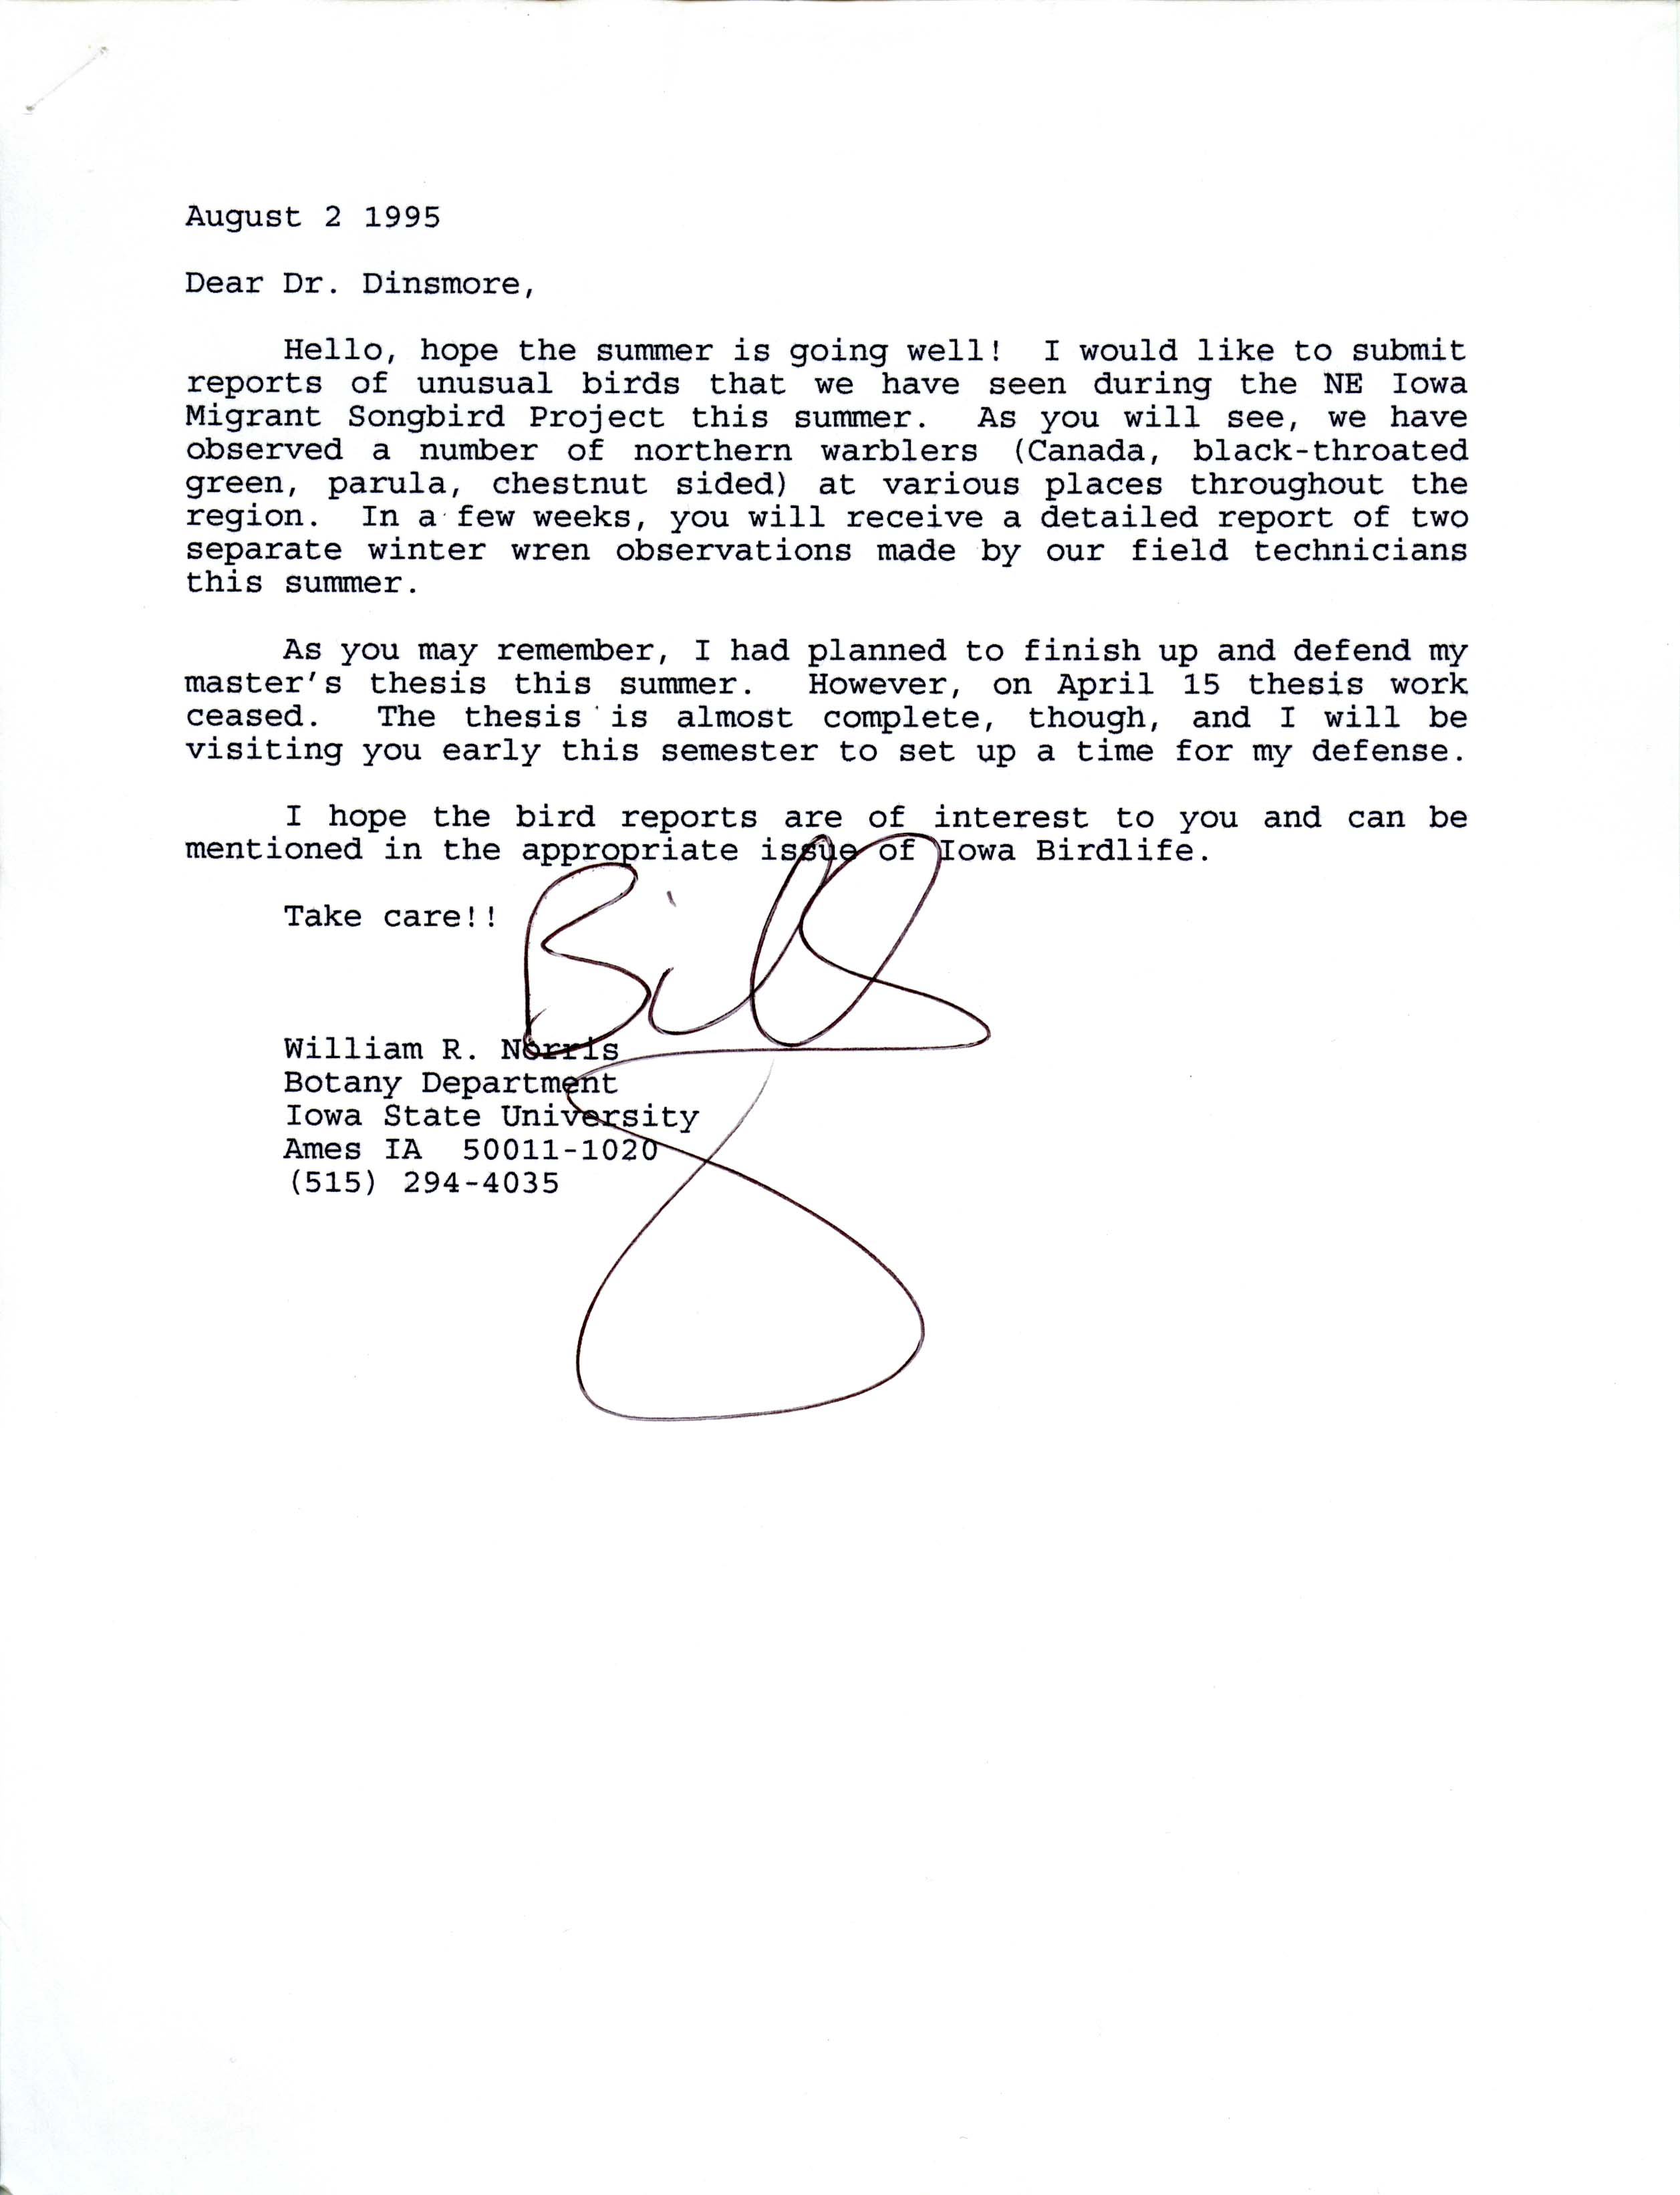 William Norris letter to Jim Dinsmore regarding unusual bird sightings, August 2, 1995